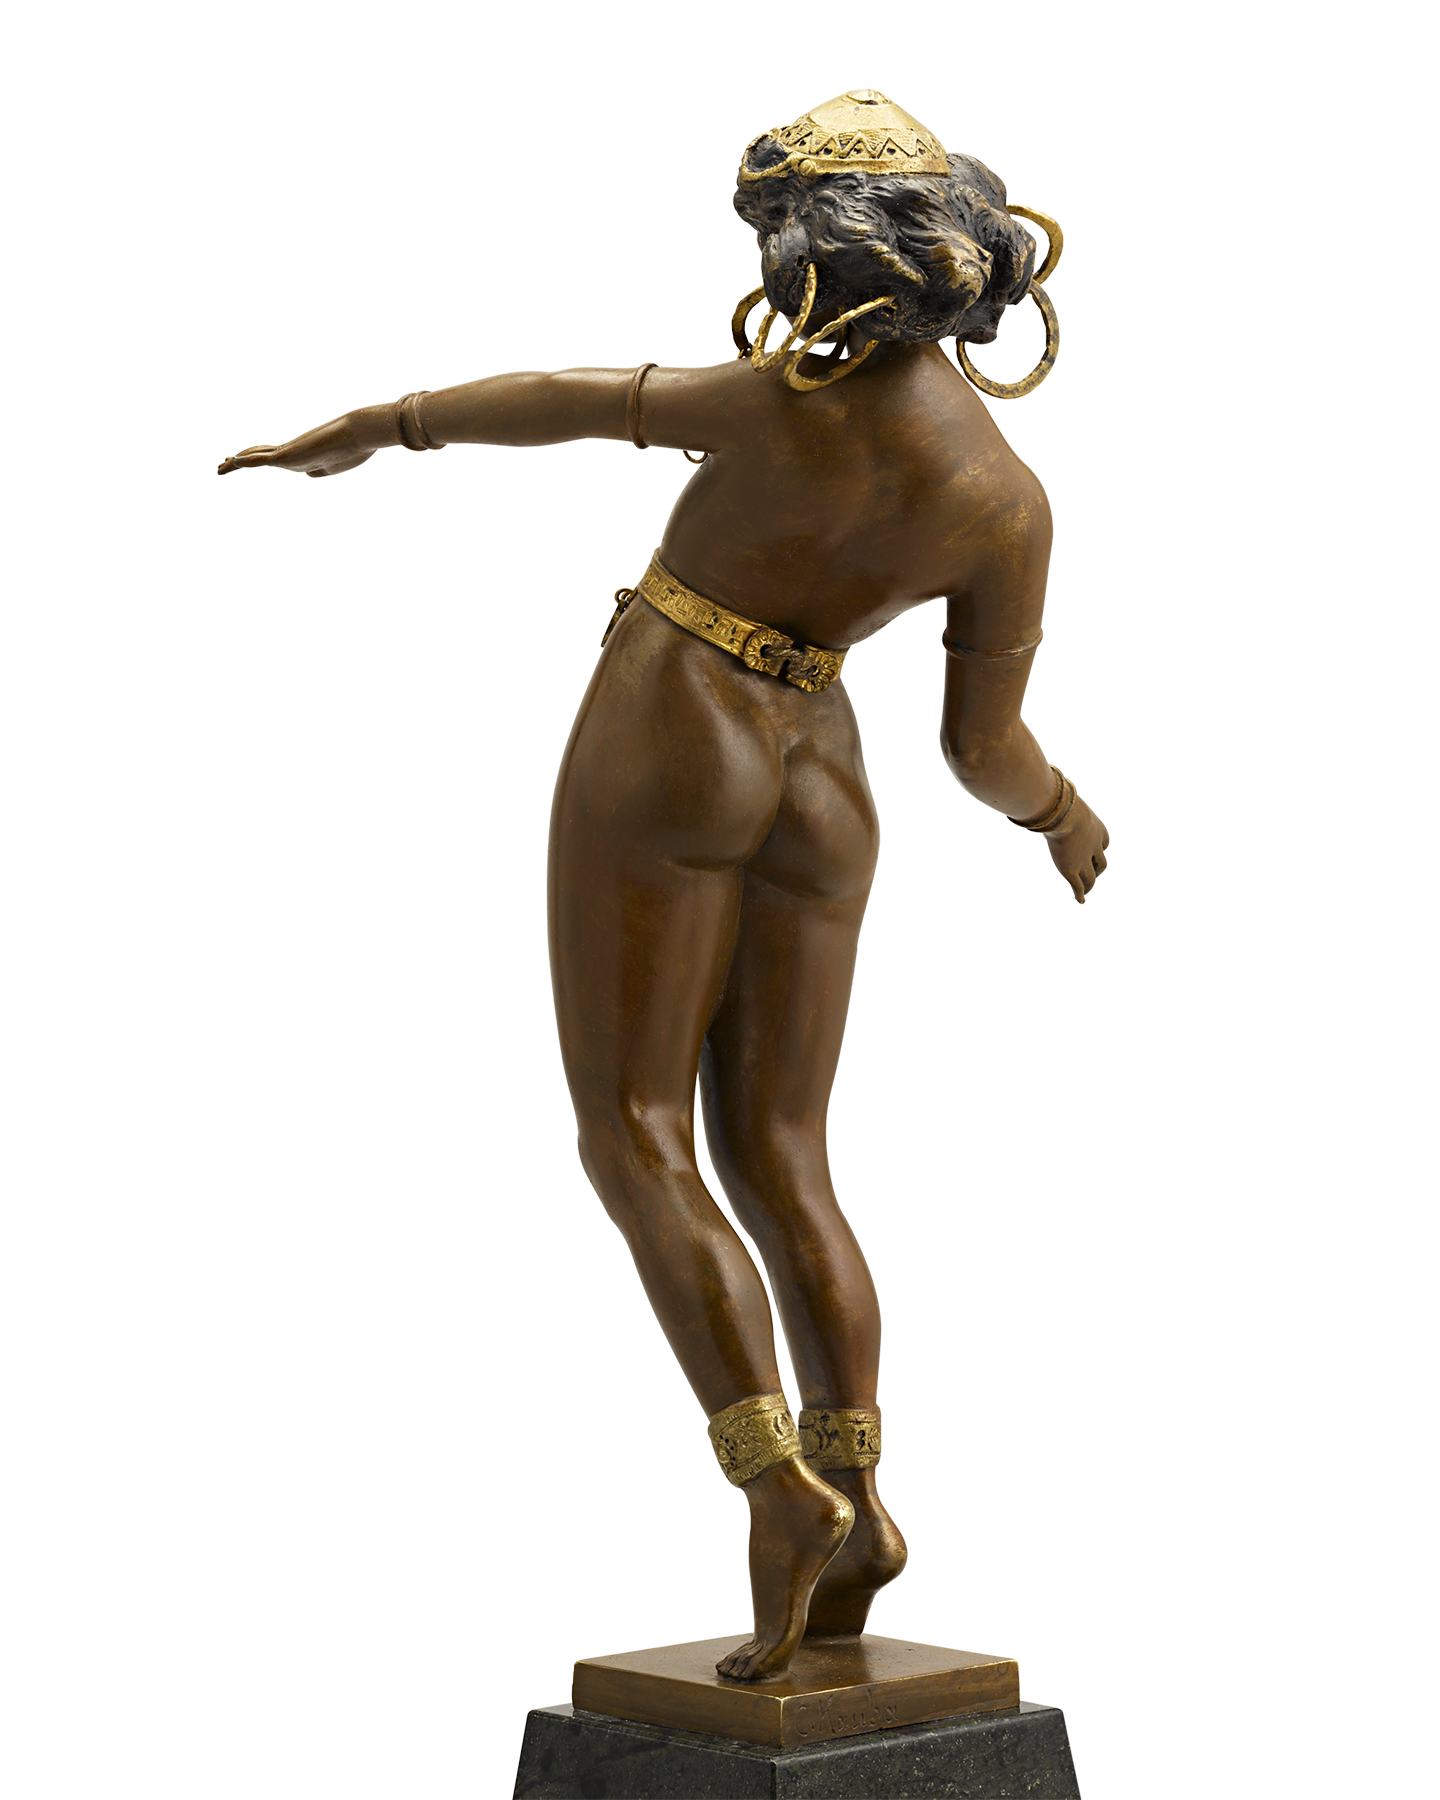 Nubian Dancer by Carl Kauba